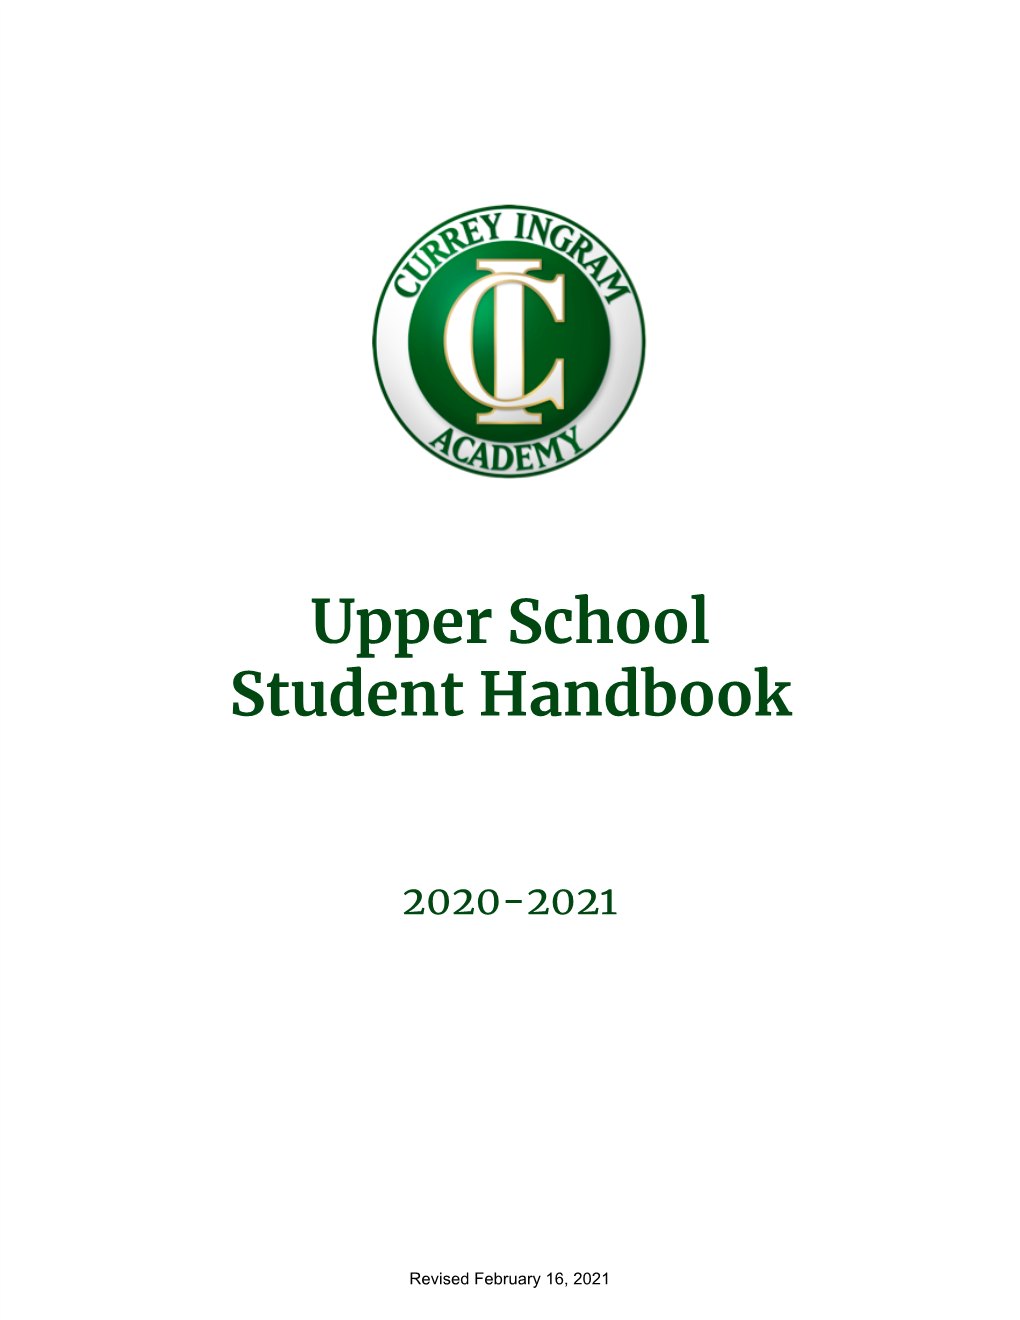 Upper School Student Handbook